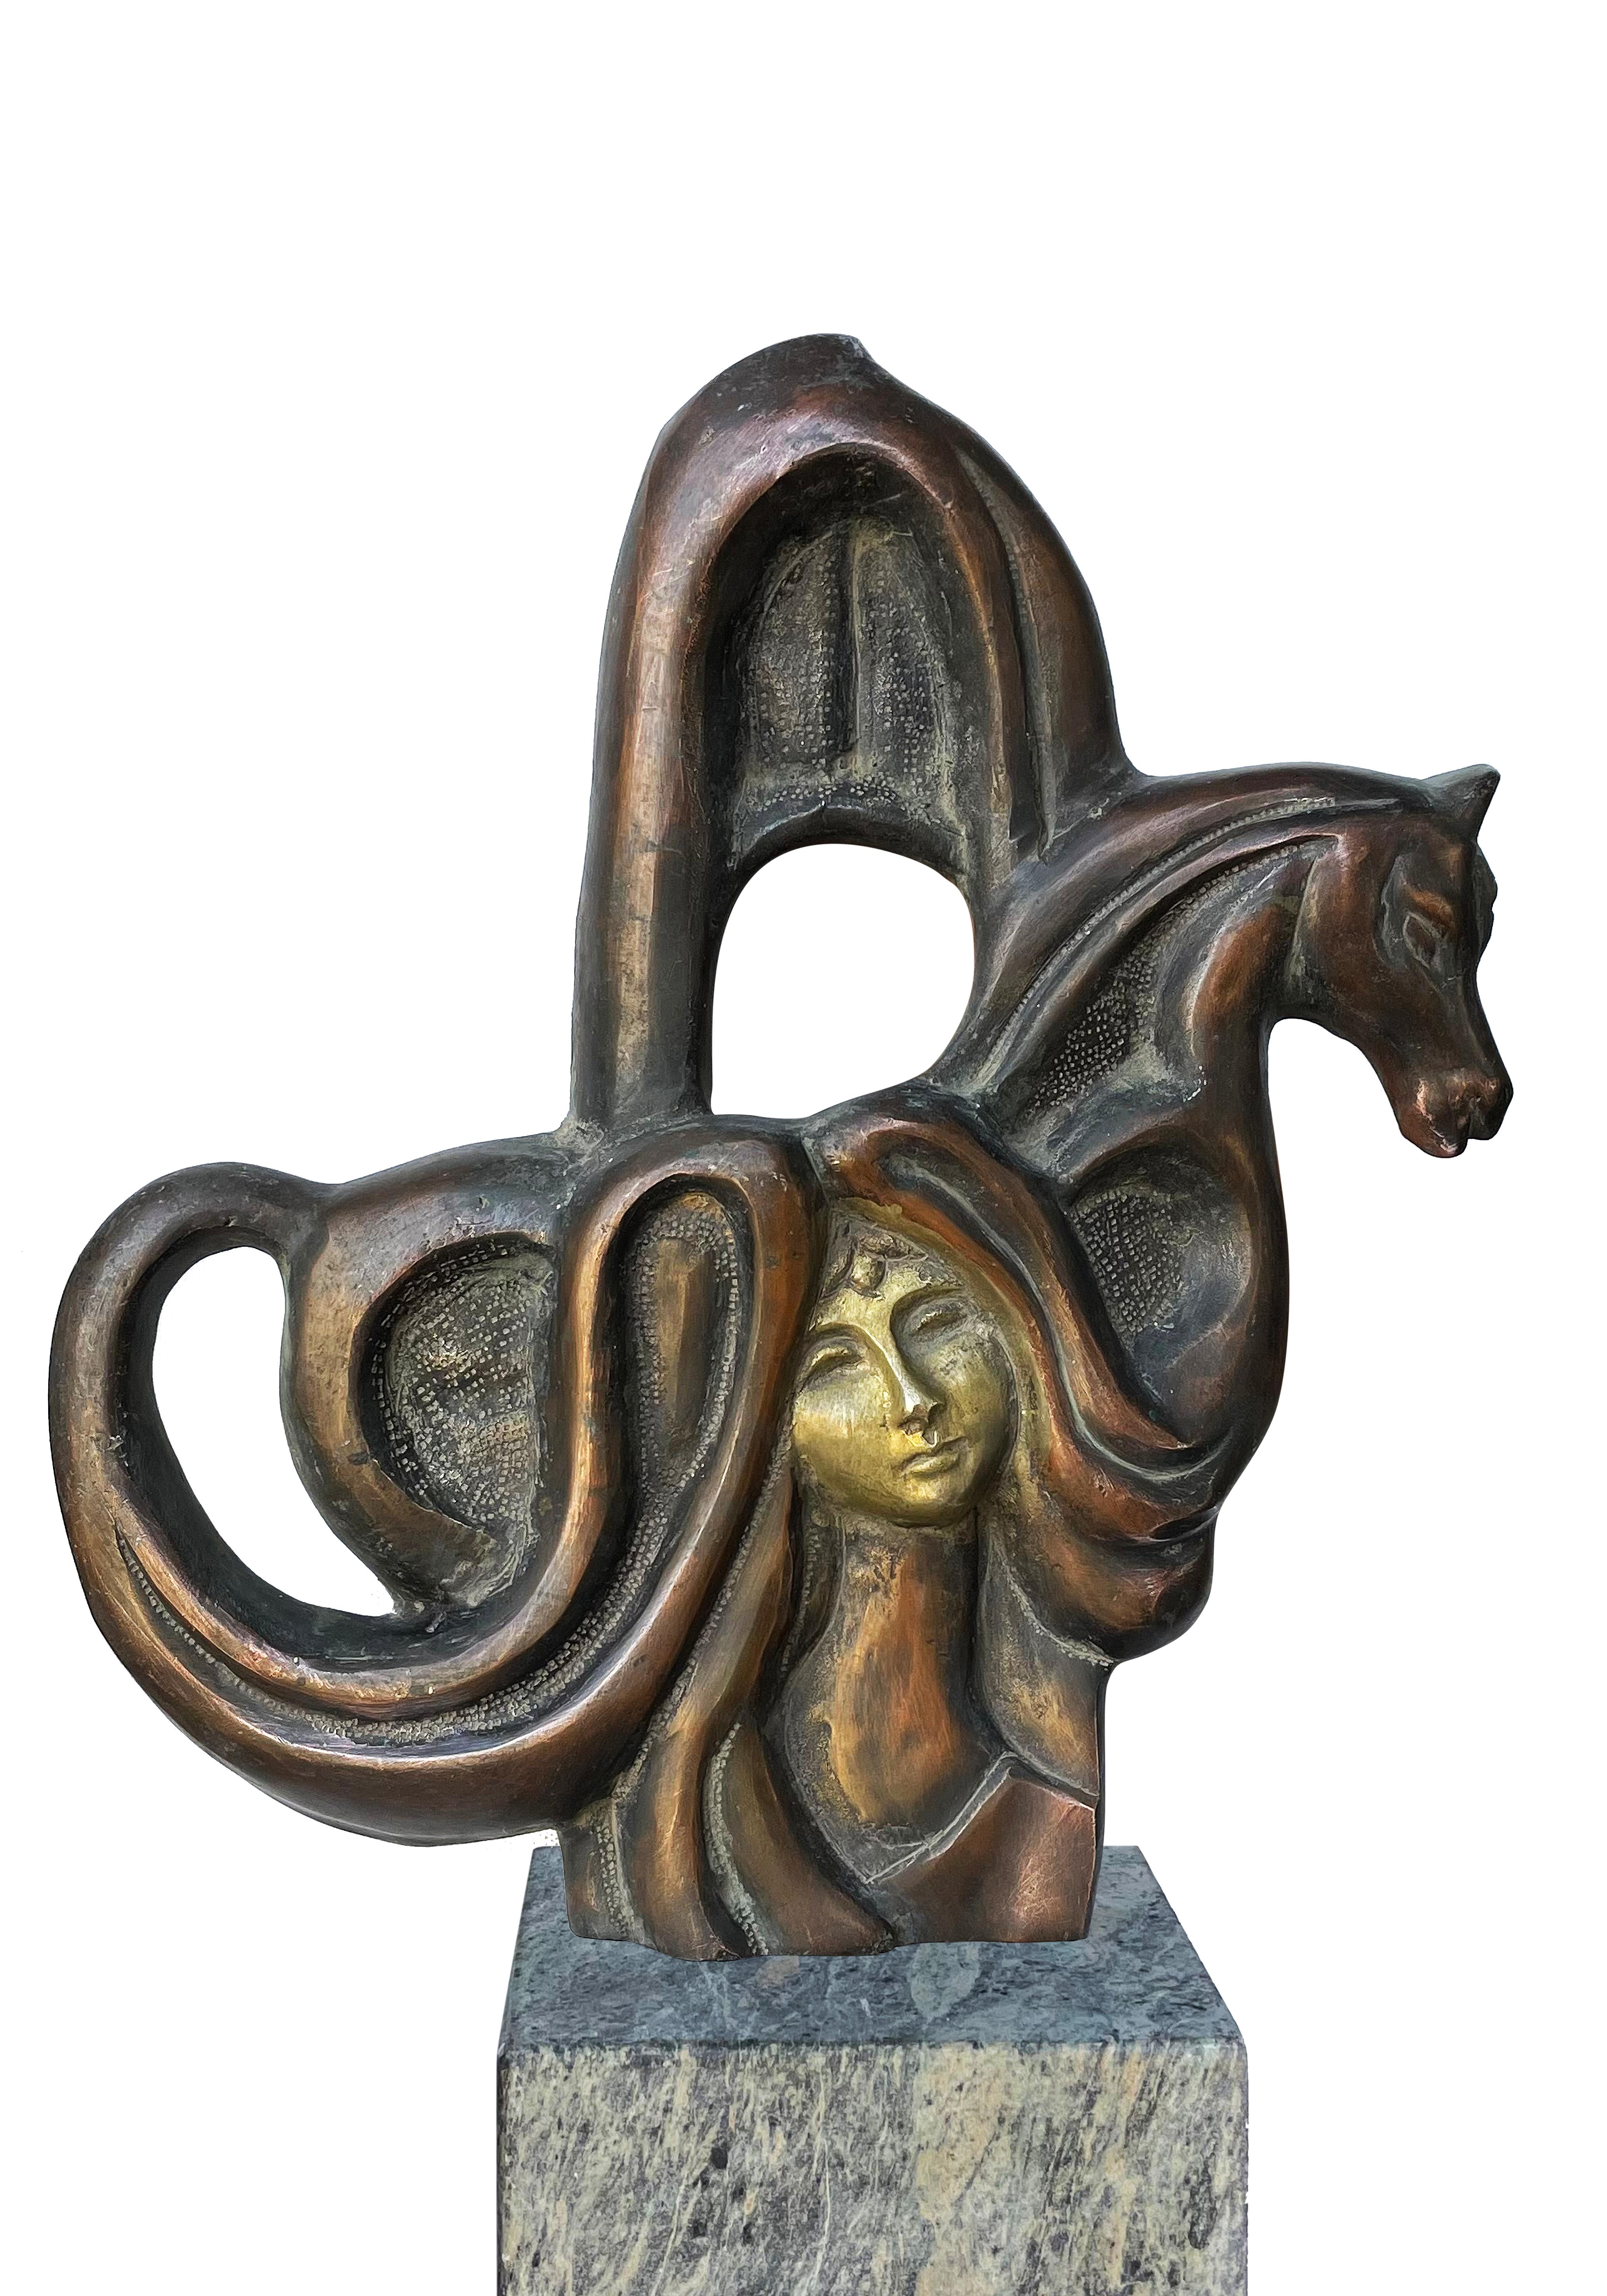 "Spirito equino II" Scultura in bronzo di 23" x 14,5" pollici di Ibrahim Abd Elmalak